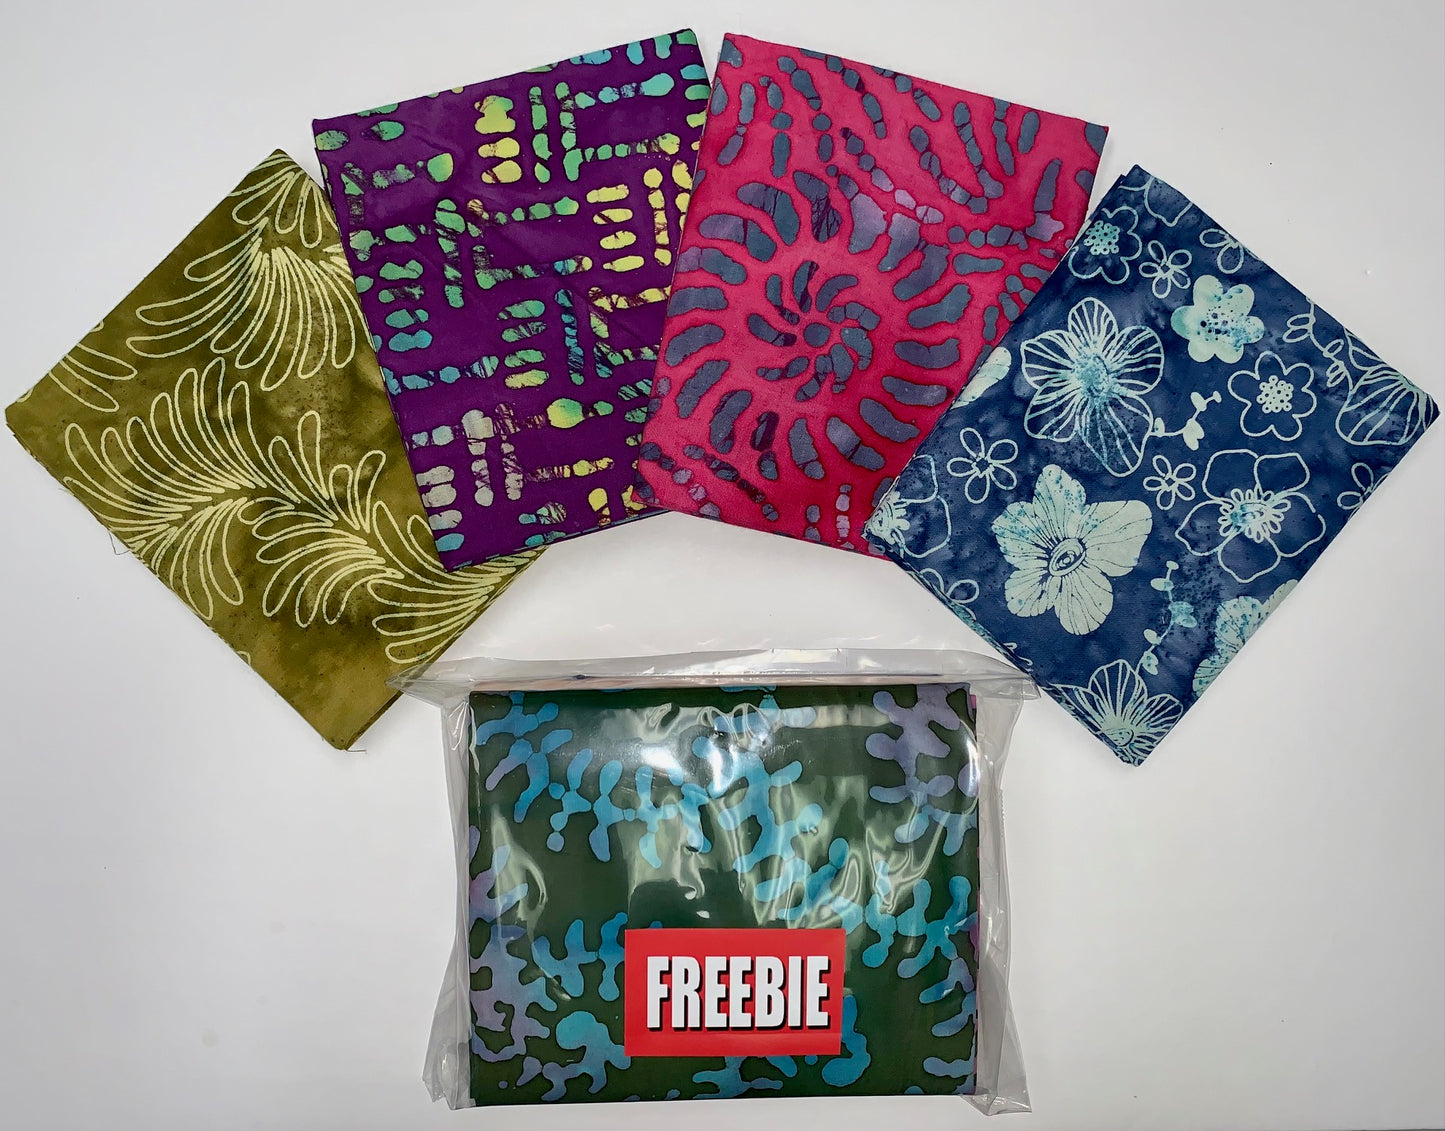 (Promo Now Over) Batik Freebie Bonus With Robert Kaufman Artisan Batik Roll-ups!